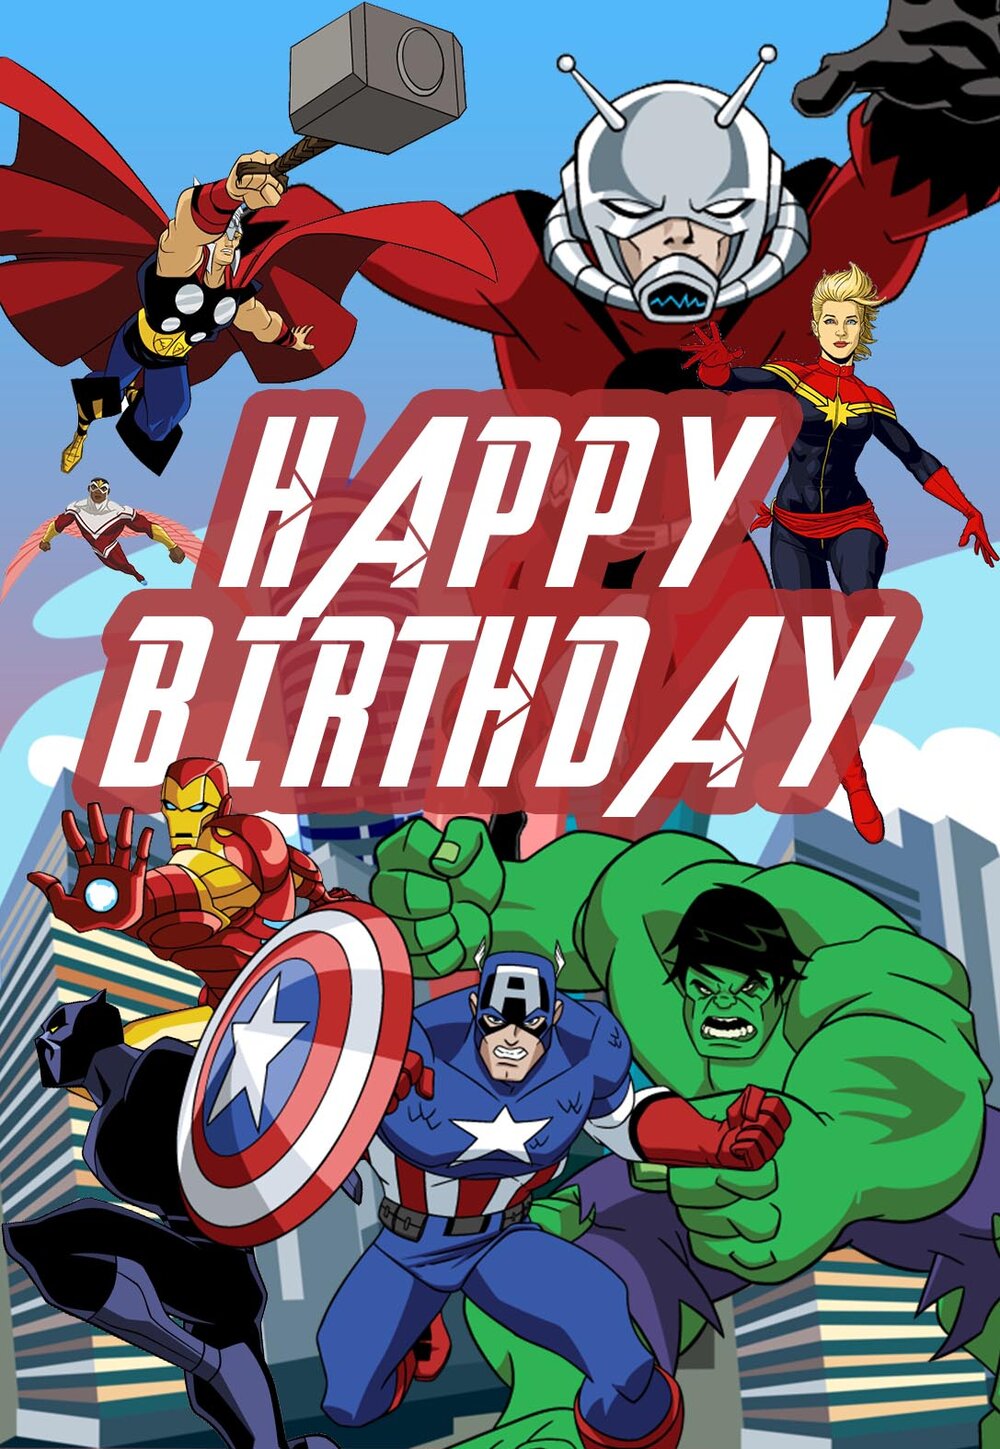 Free Printable Superhero Birthday Cards - Many Categories Throughout Superhero Birthday Card Template